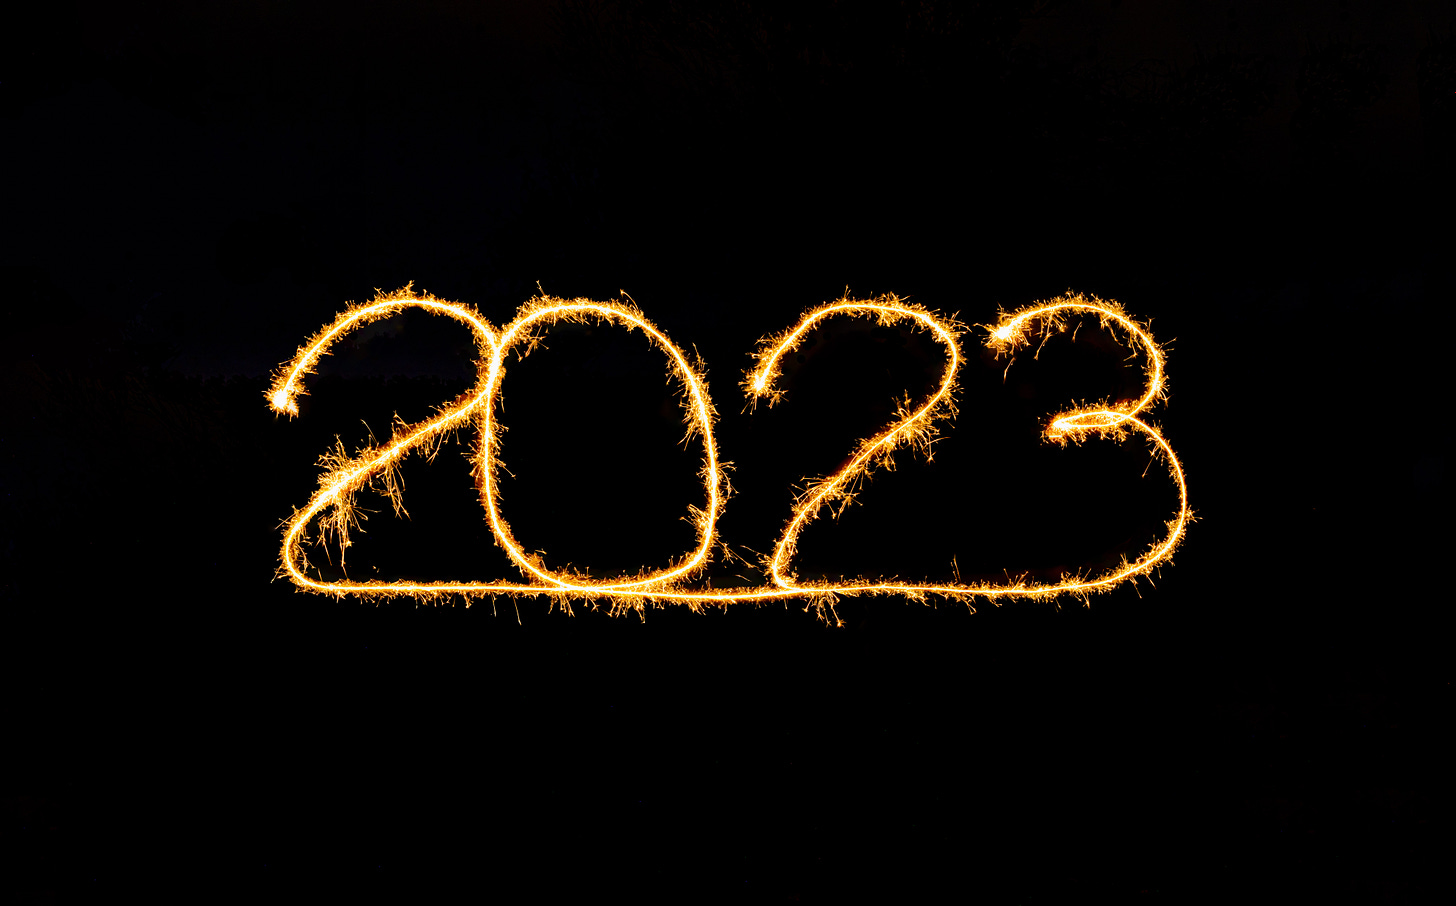 2023 written in sparklers Moritz Knöringer / Unsplash